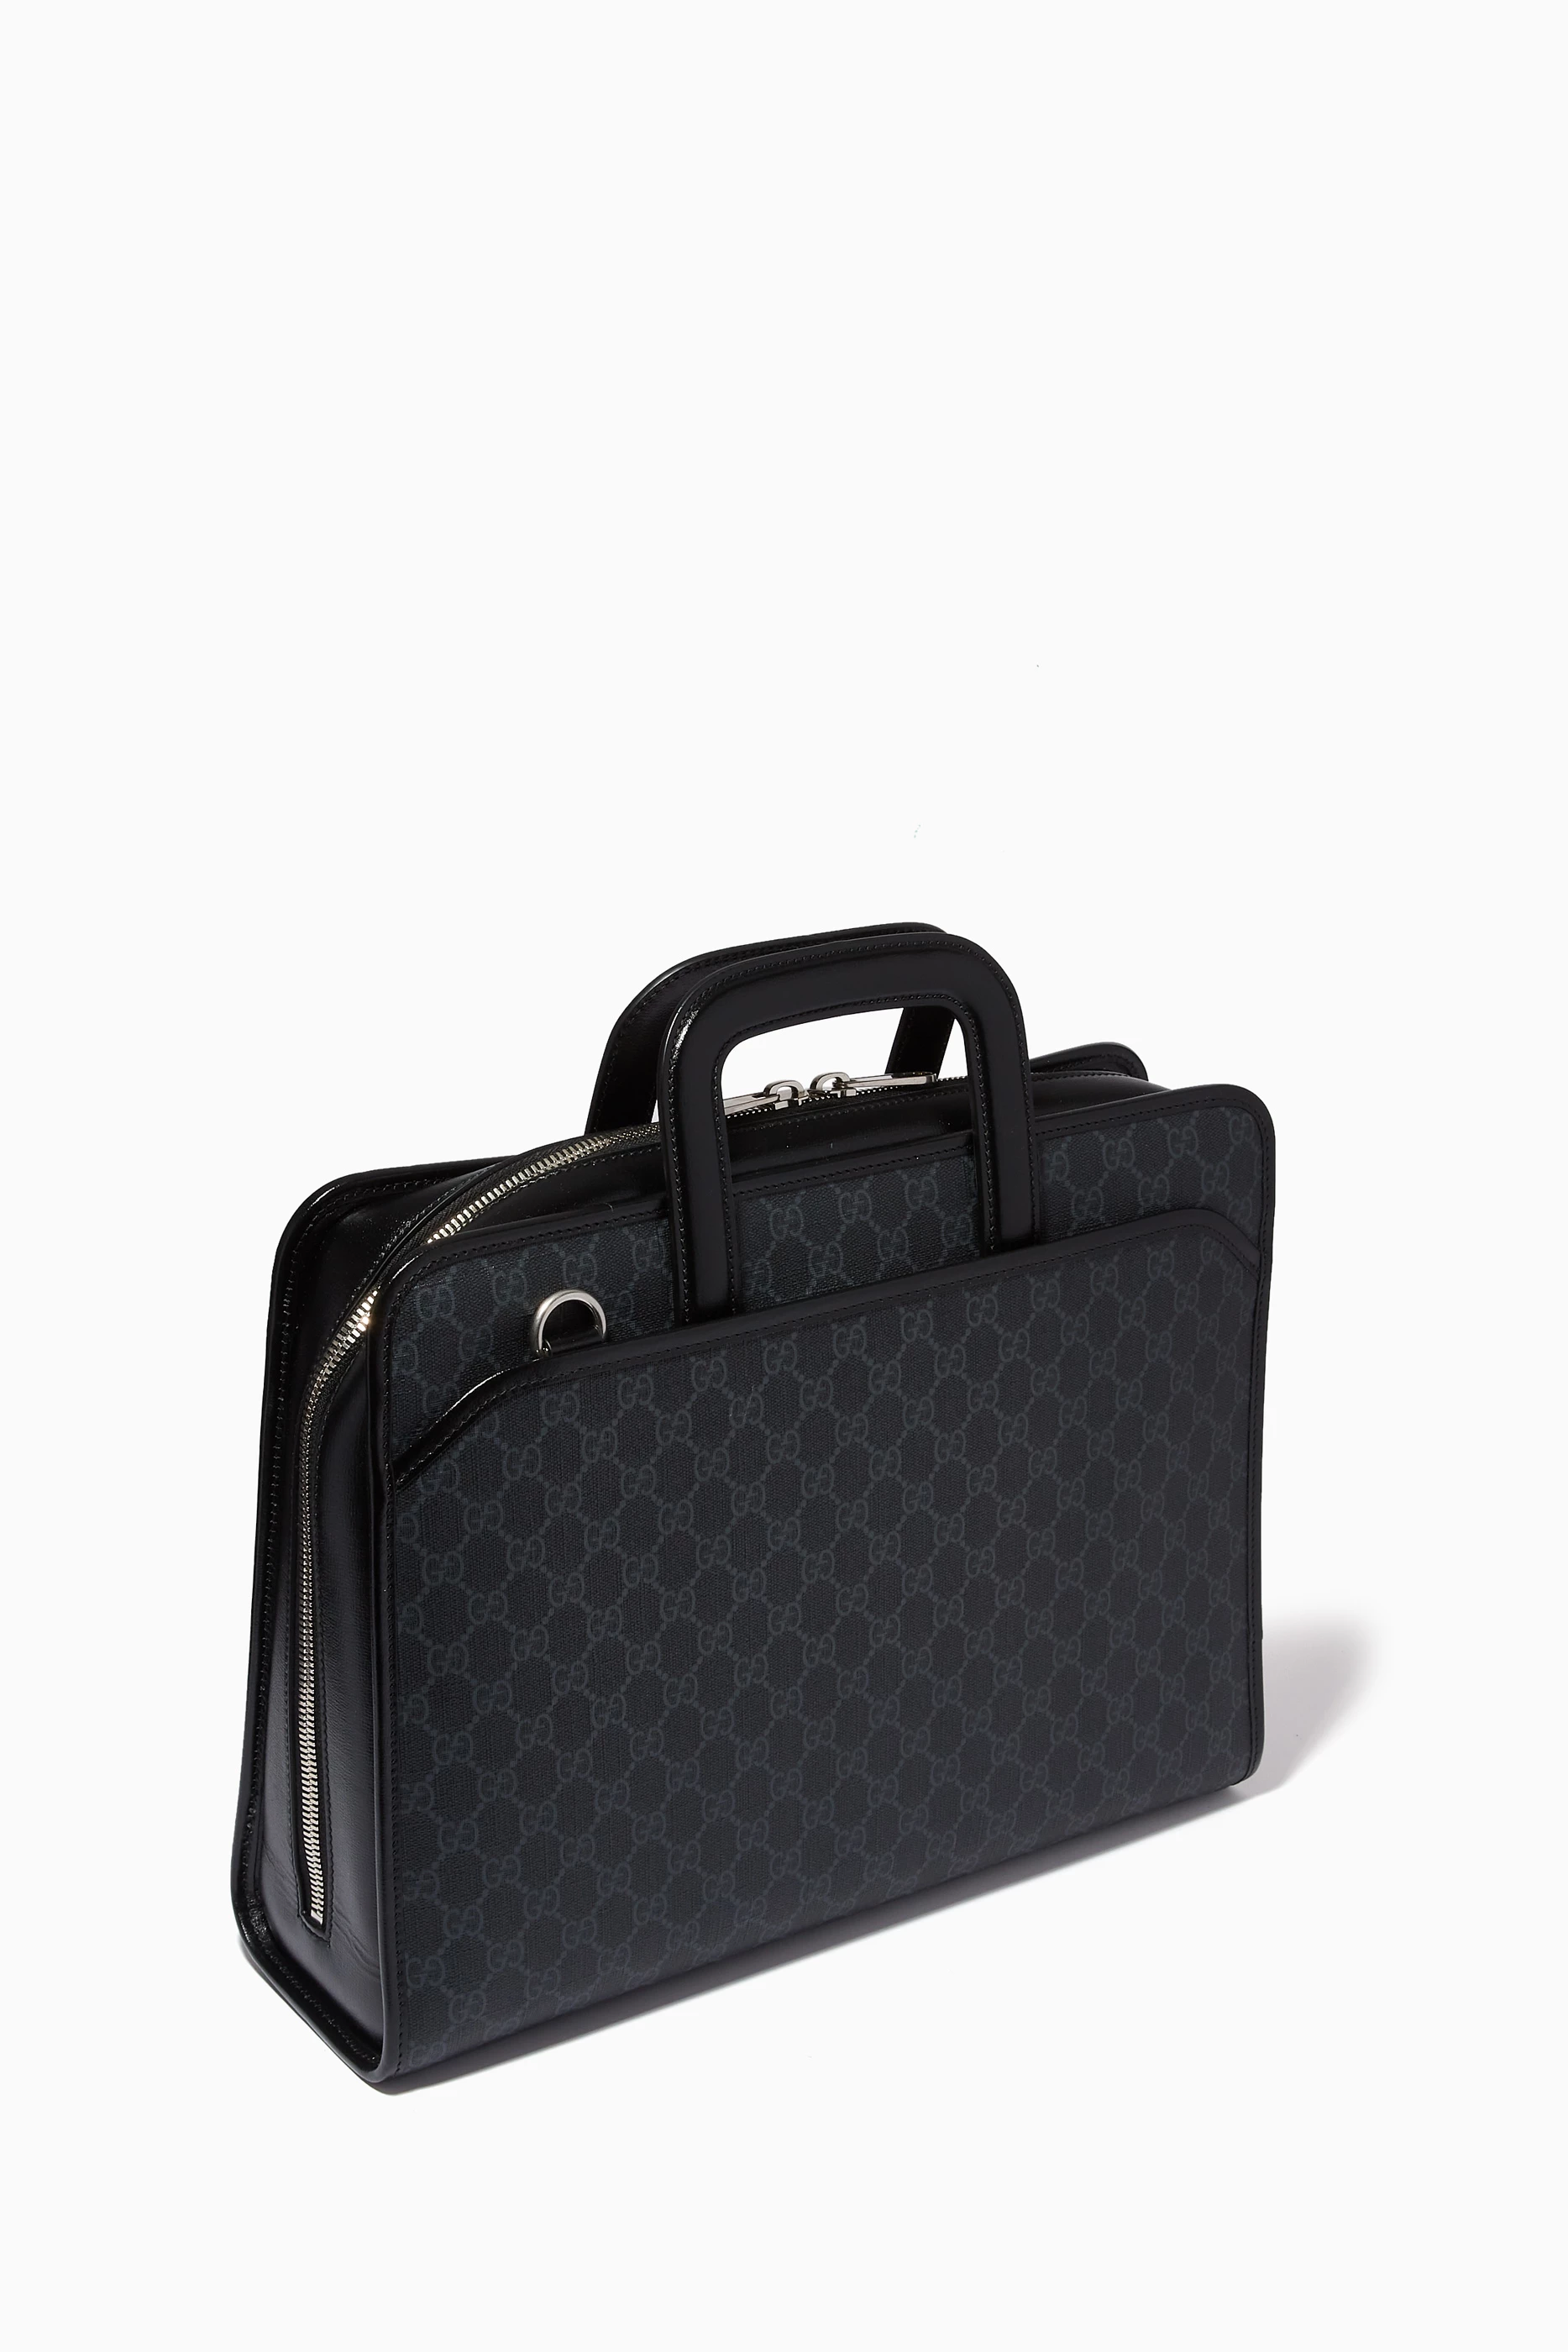 Buy Gucci Black Briefcase in GG Supreme Canvas for MEN in UAE